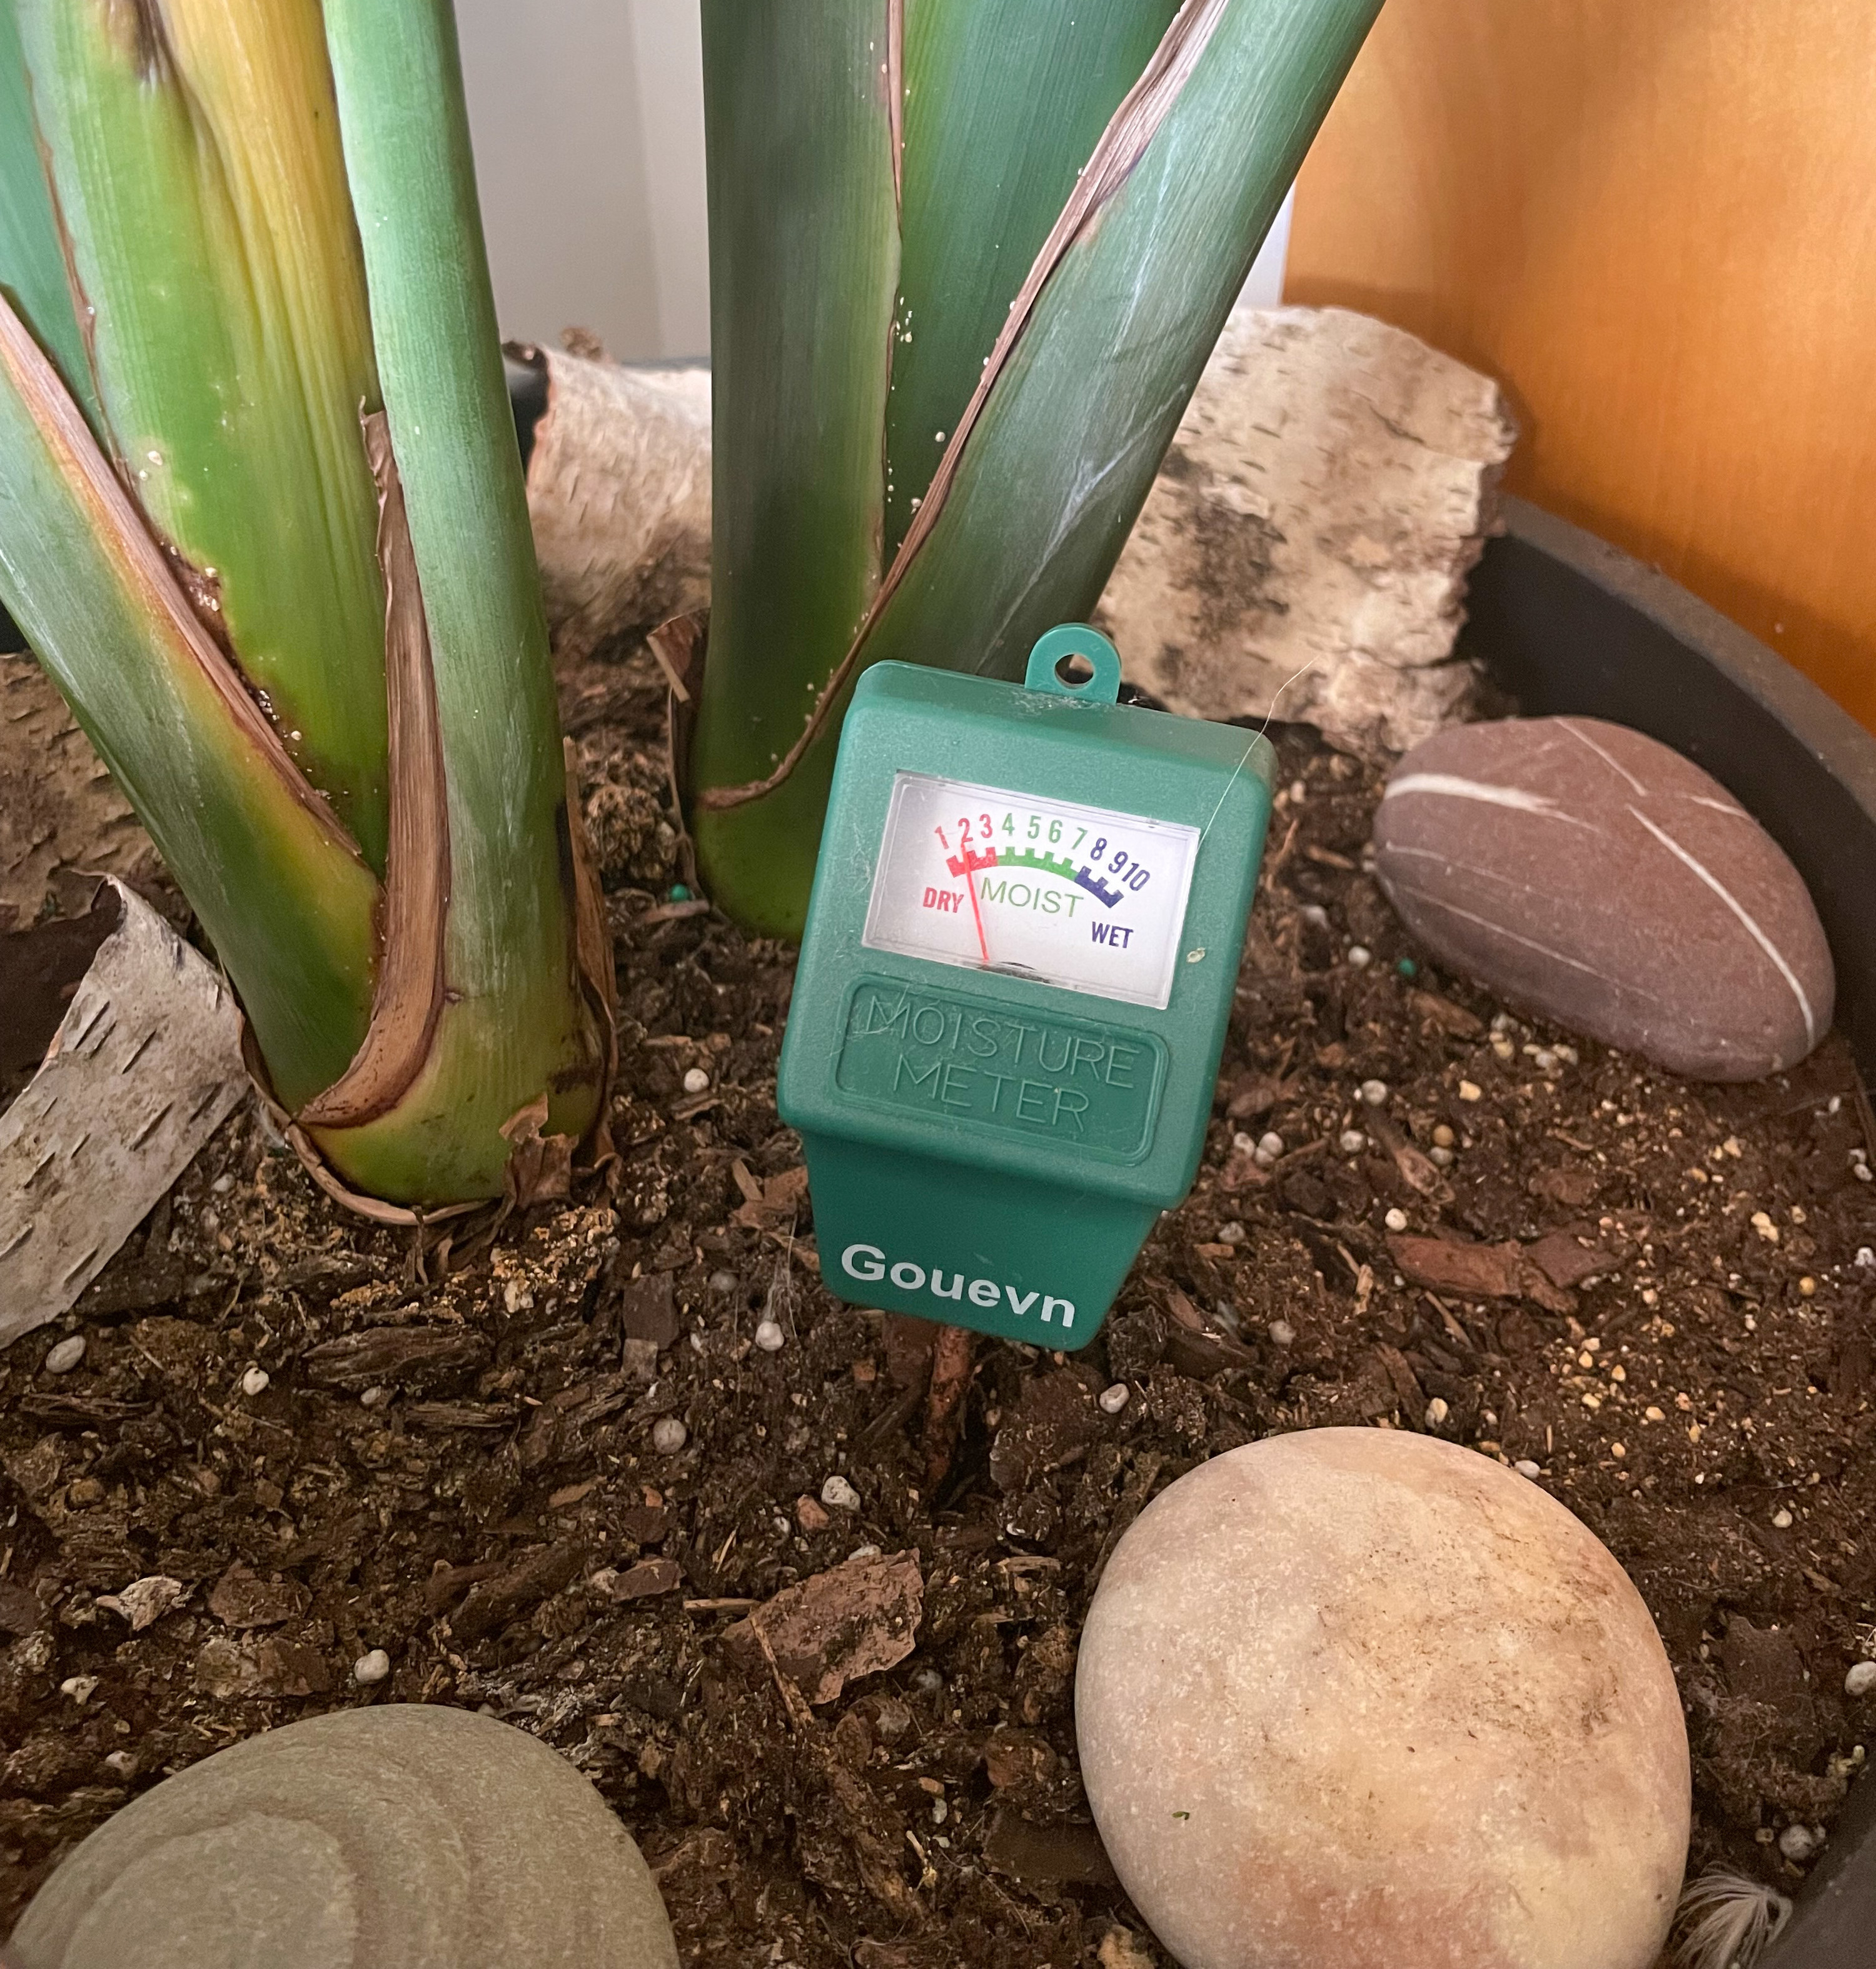 the moisture meter inside the plant pot